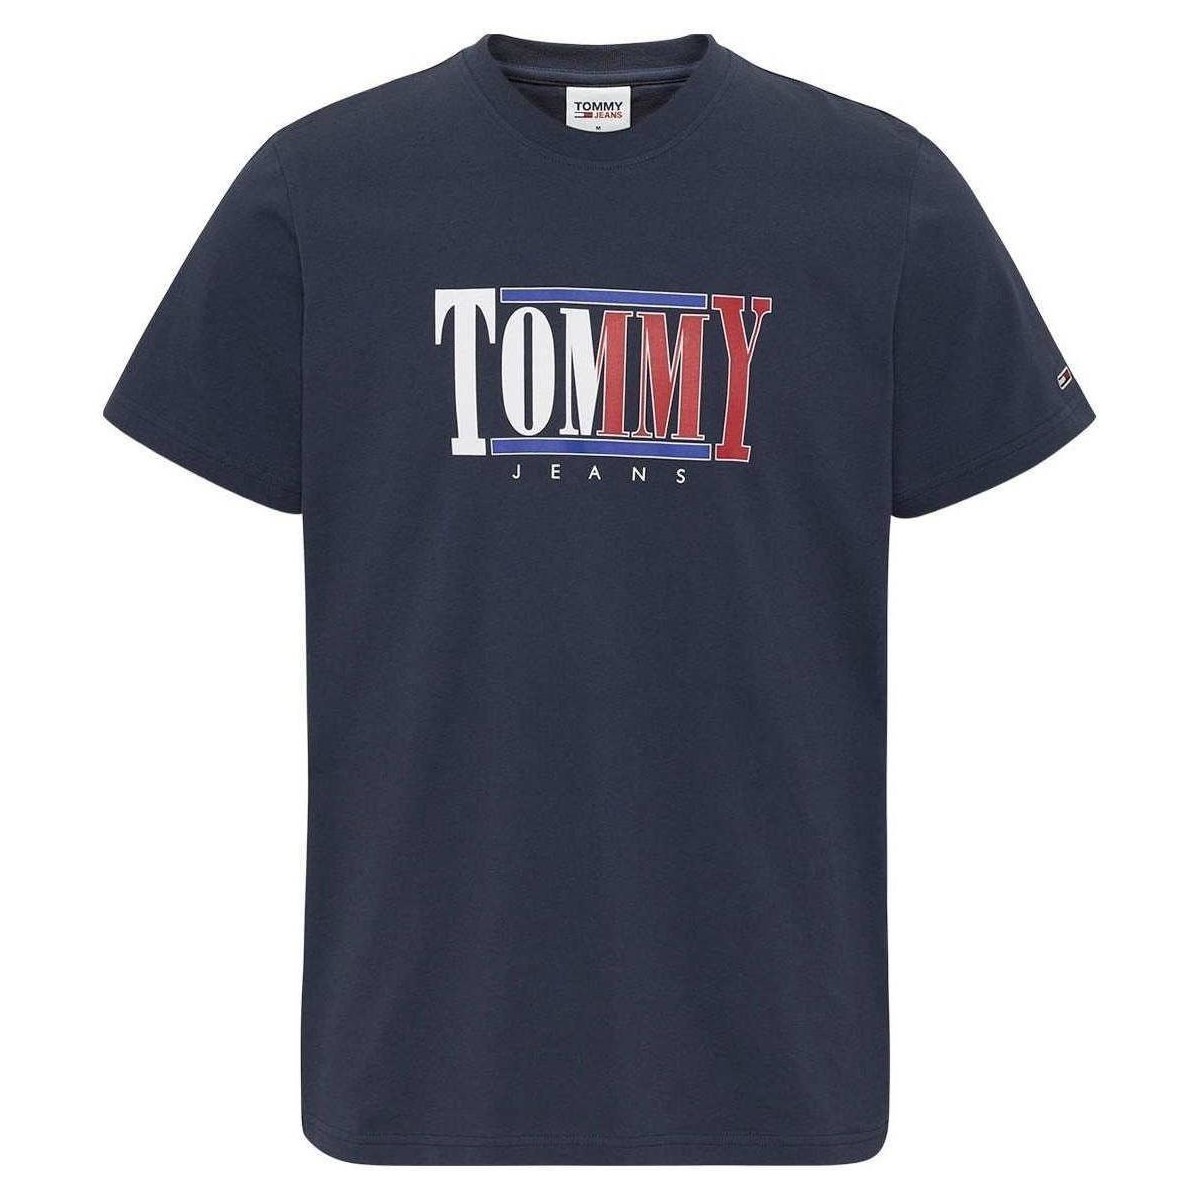 Oblačila Moški Majice s kratkimi rokavi Tommy Hilfiger  Modra